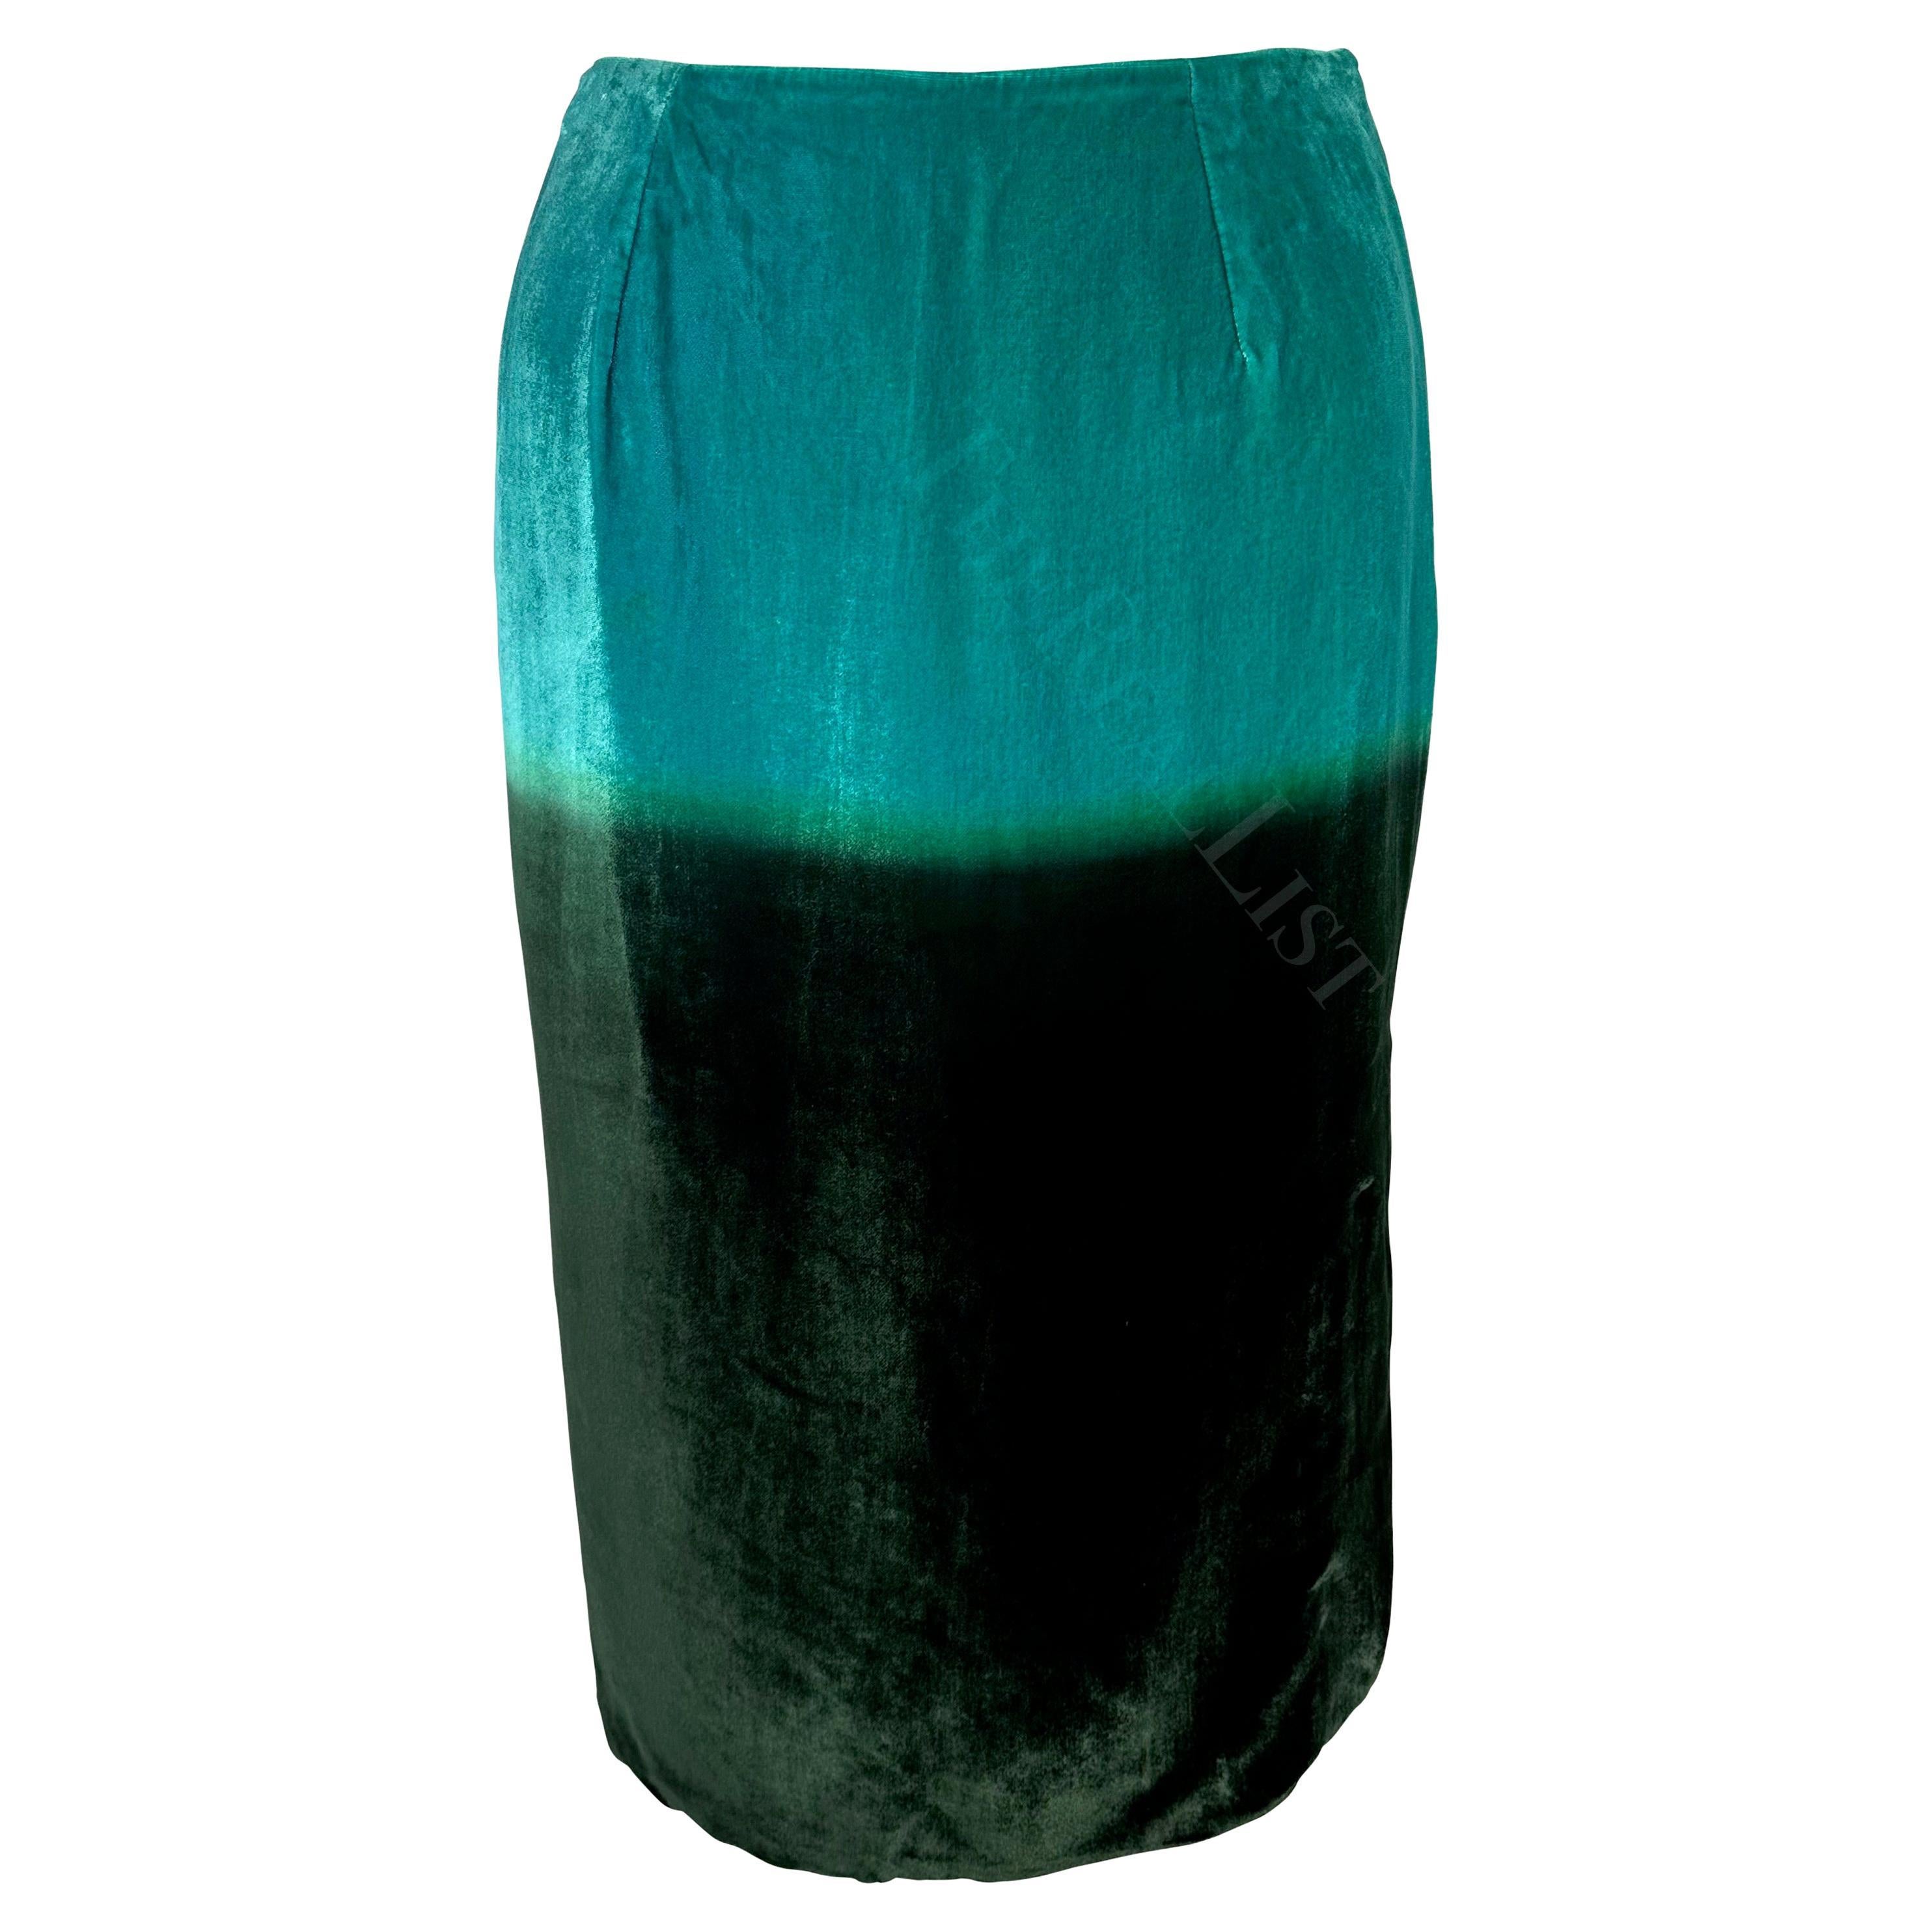 S/S 1997 Gucci by Tom Ford Blue Green Ombré Velvet Runway Skirt For Sale